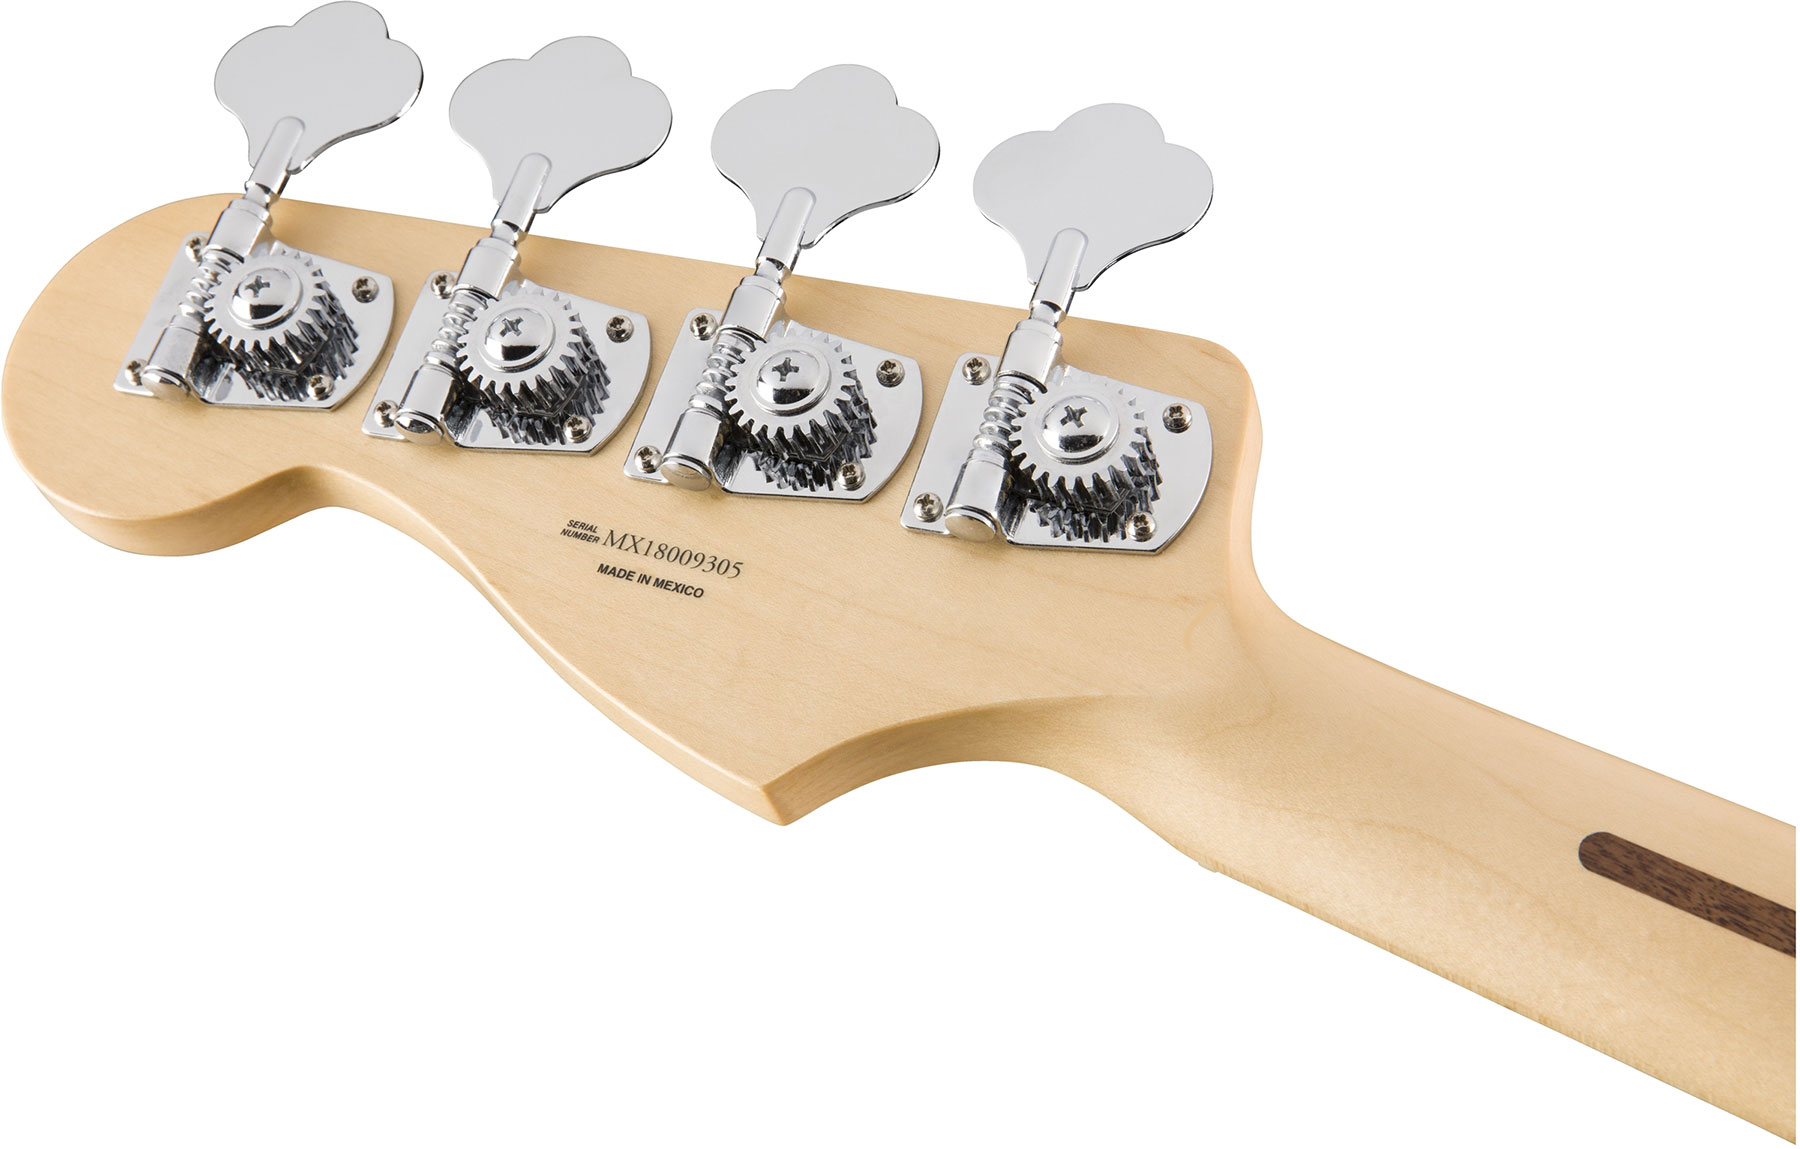 Fender Jaguar Bass Player Mex Mn - Tidepool - Solid body electric bass - Variation 4